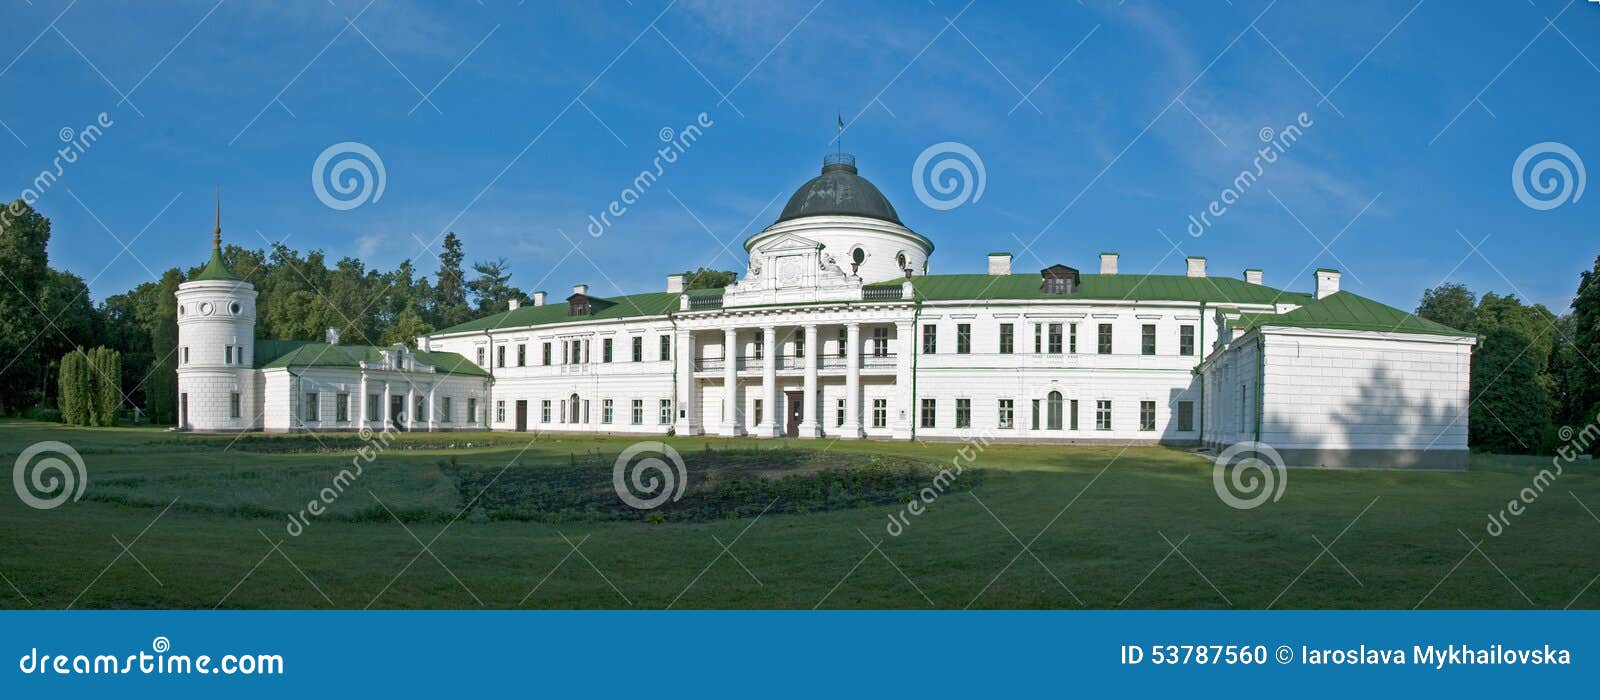 manor tarnowski (xviii-xix centuries.). the palace and park